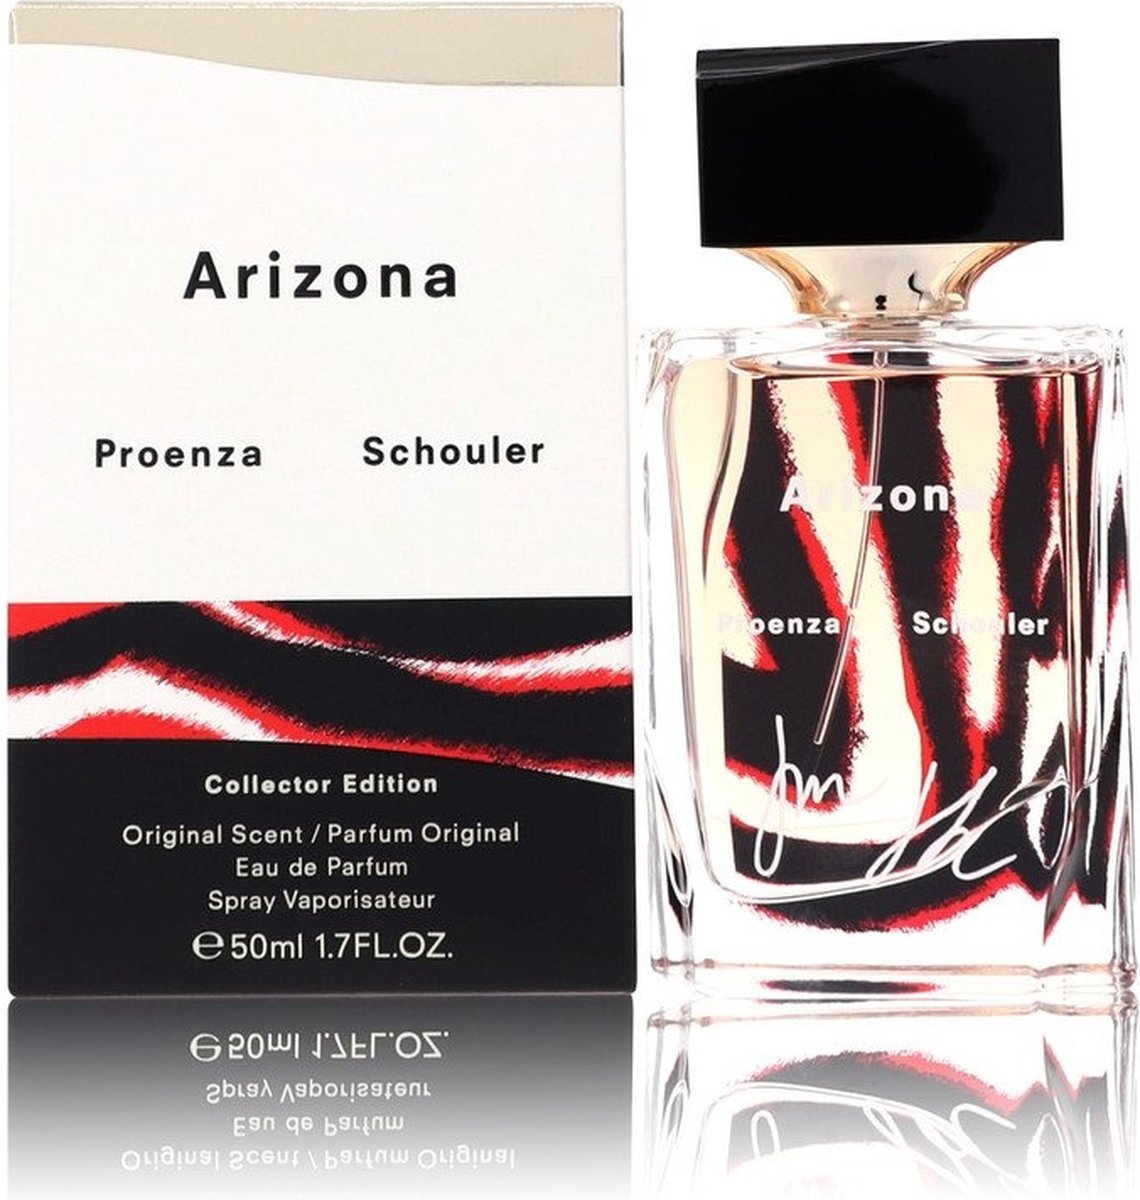 Proenza Schouler Arizona Eau De Parfum Spray (Collector's Edition) 50 ml